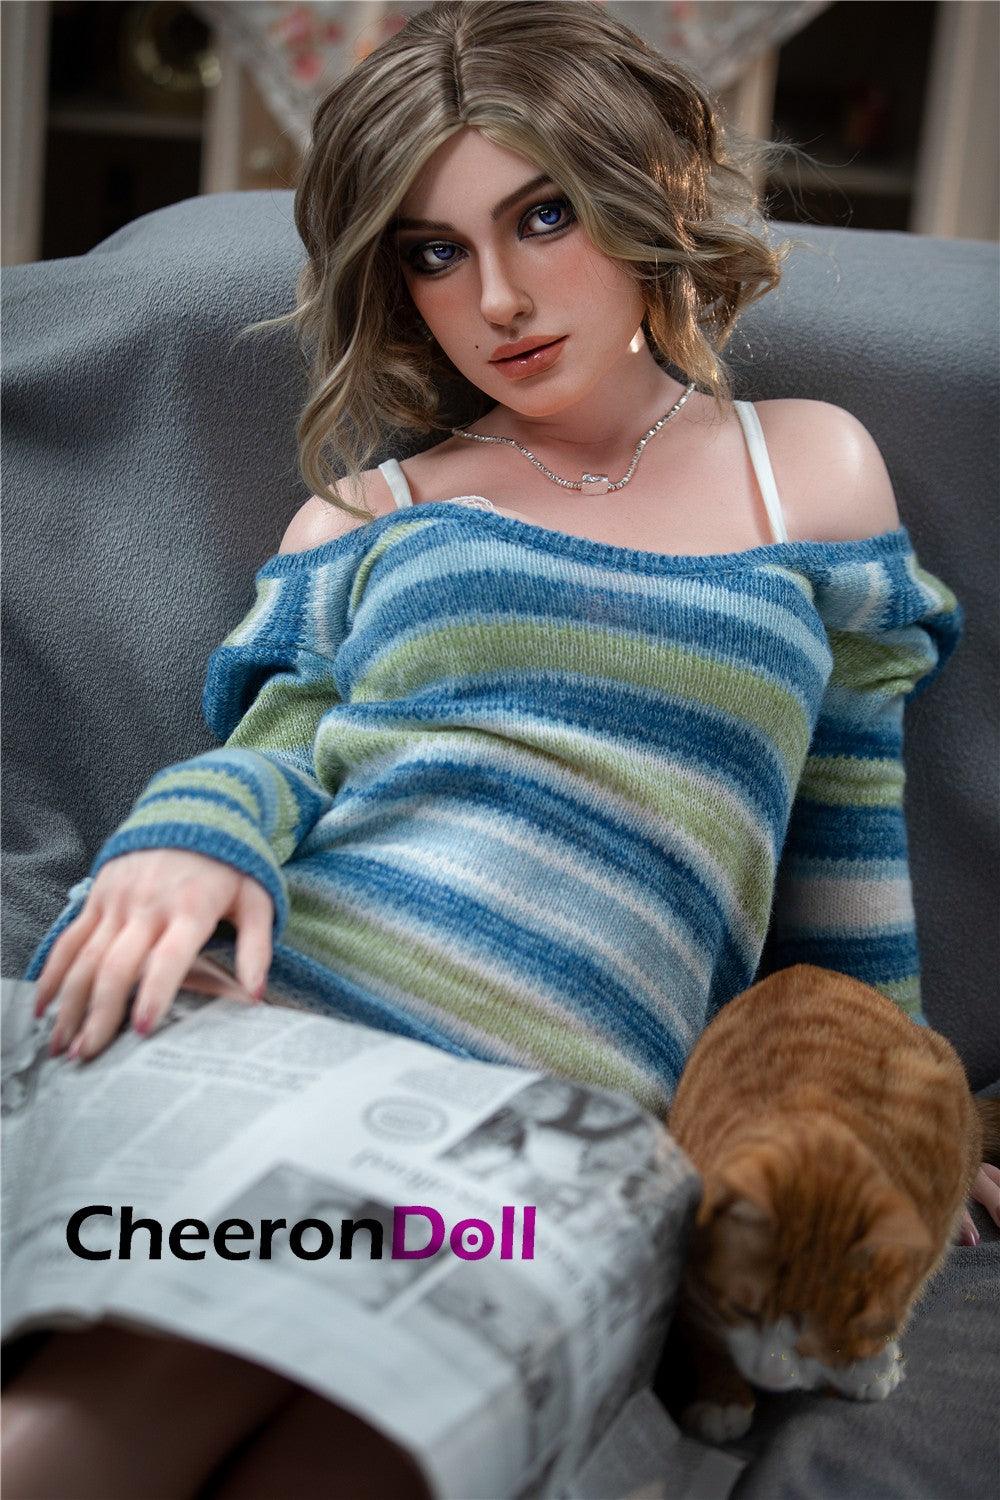 CHEERONDOLL 152CM SILICONE LIFESIZE SEX DOLL S17 LUNA - Cheeron Doll